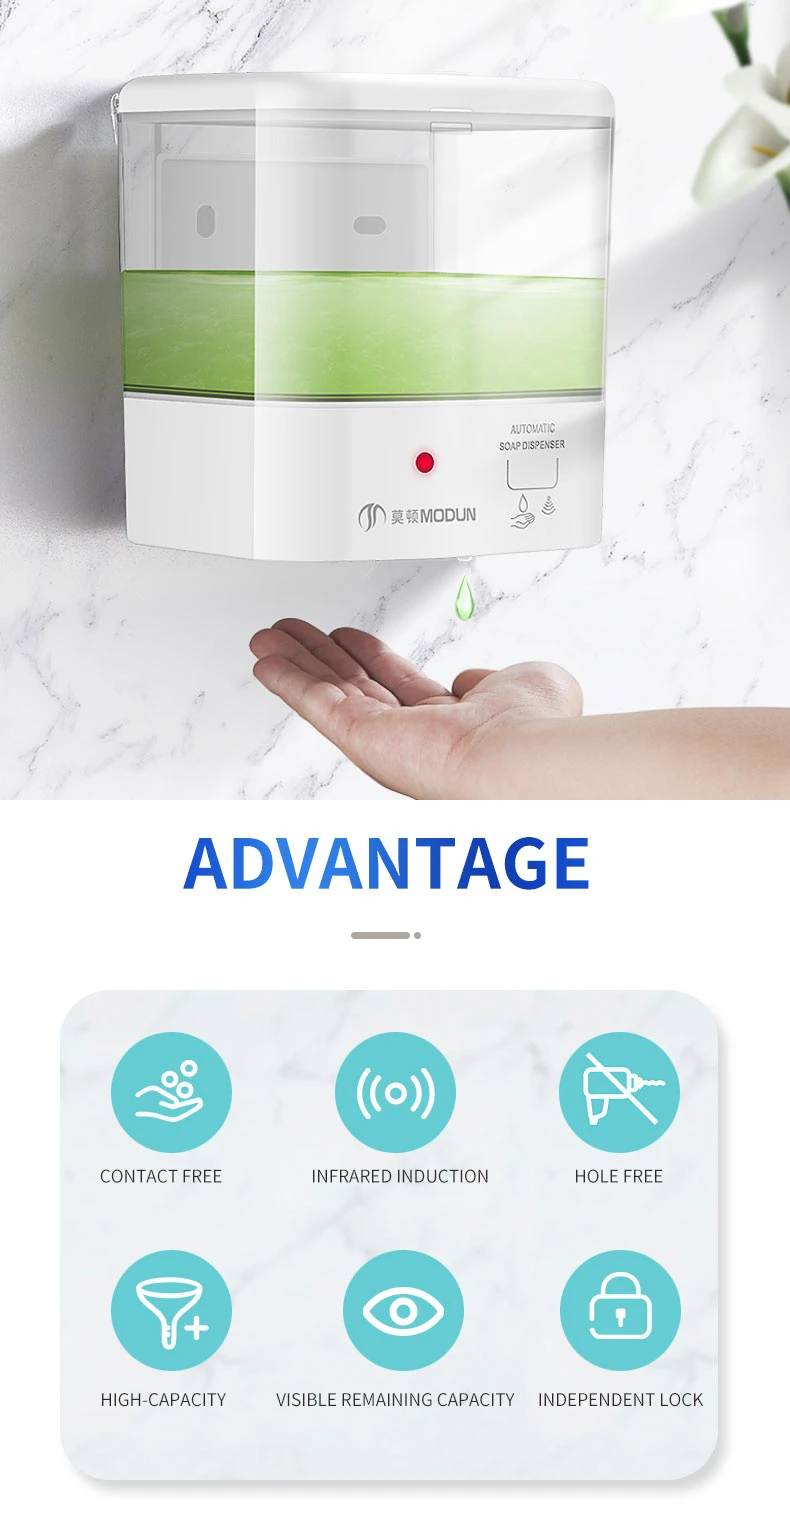 600ml Bathroom Soap Dispenser Automatic Sensor Soap Dispenser Infrared Foam / Liquid Auto Hand Soap Dispenser